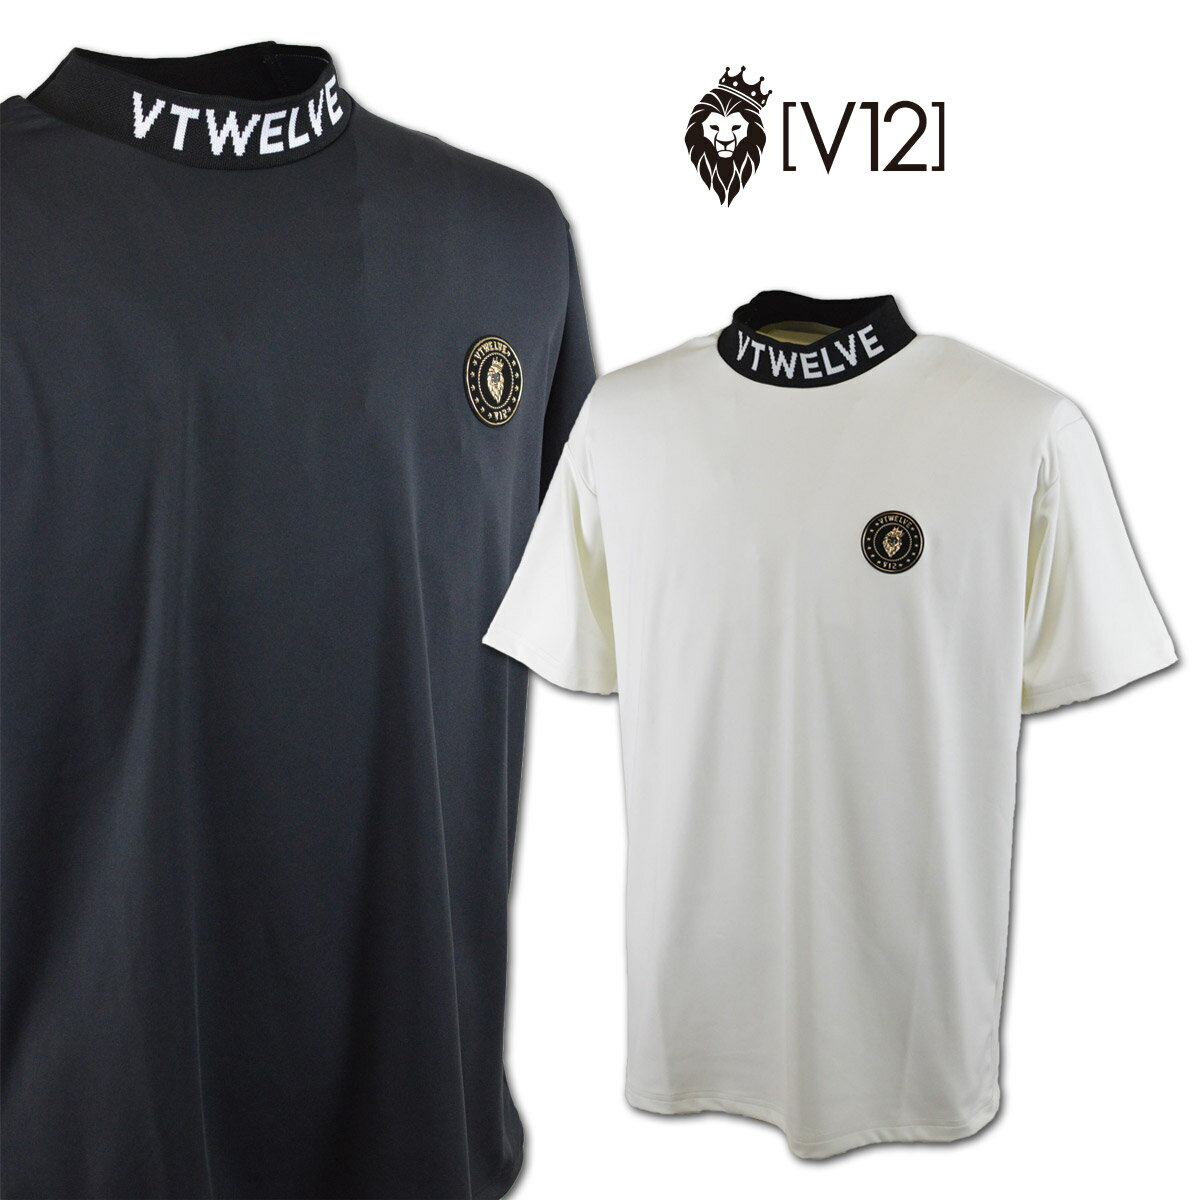 V12 半袖ハイネックシャツ メンズ 春夏用 黒 白 M L LL v122410mk15